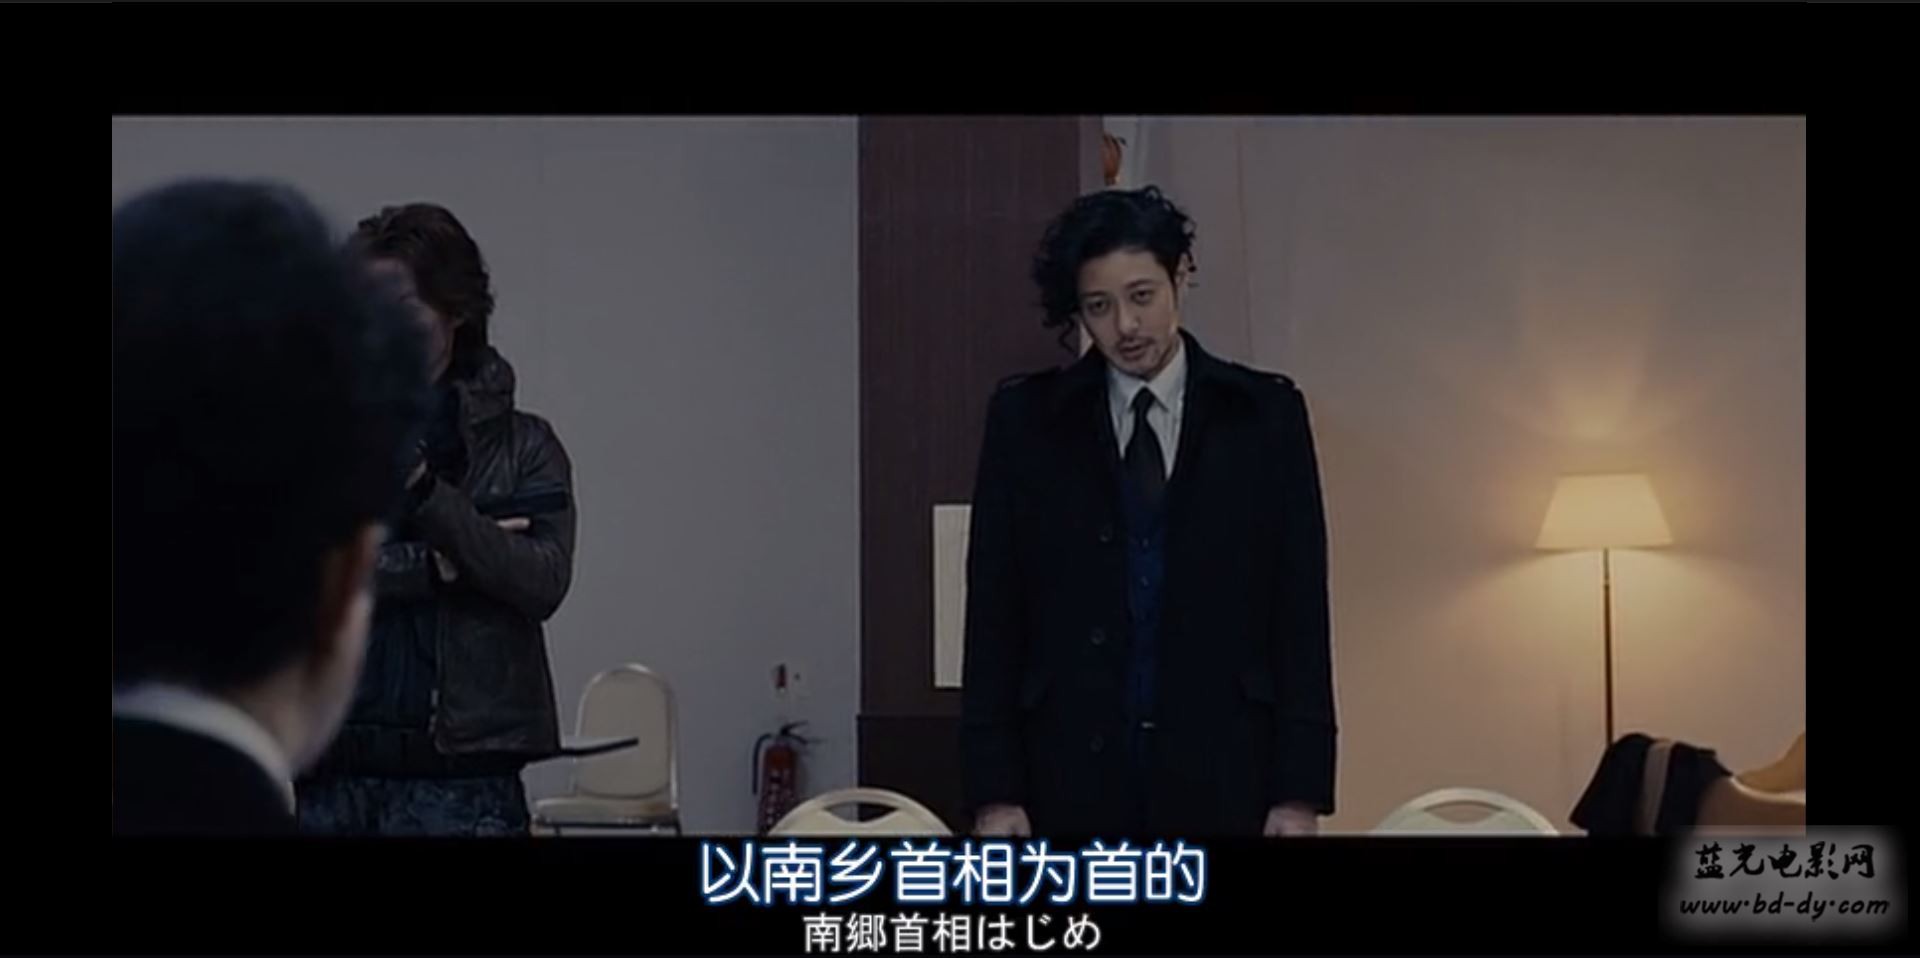 《S-最后的警官 电影版》2015日本动作犯罪.DVD.中日双字截图;jsessionid=NjCRRDLjNtSi8_5ta1YYCwOZ2h9B-J83ooL4euIW